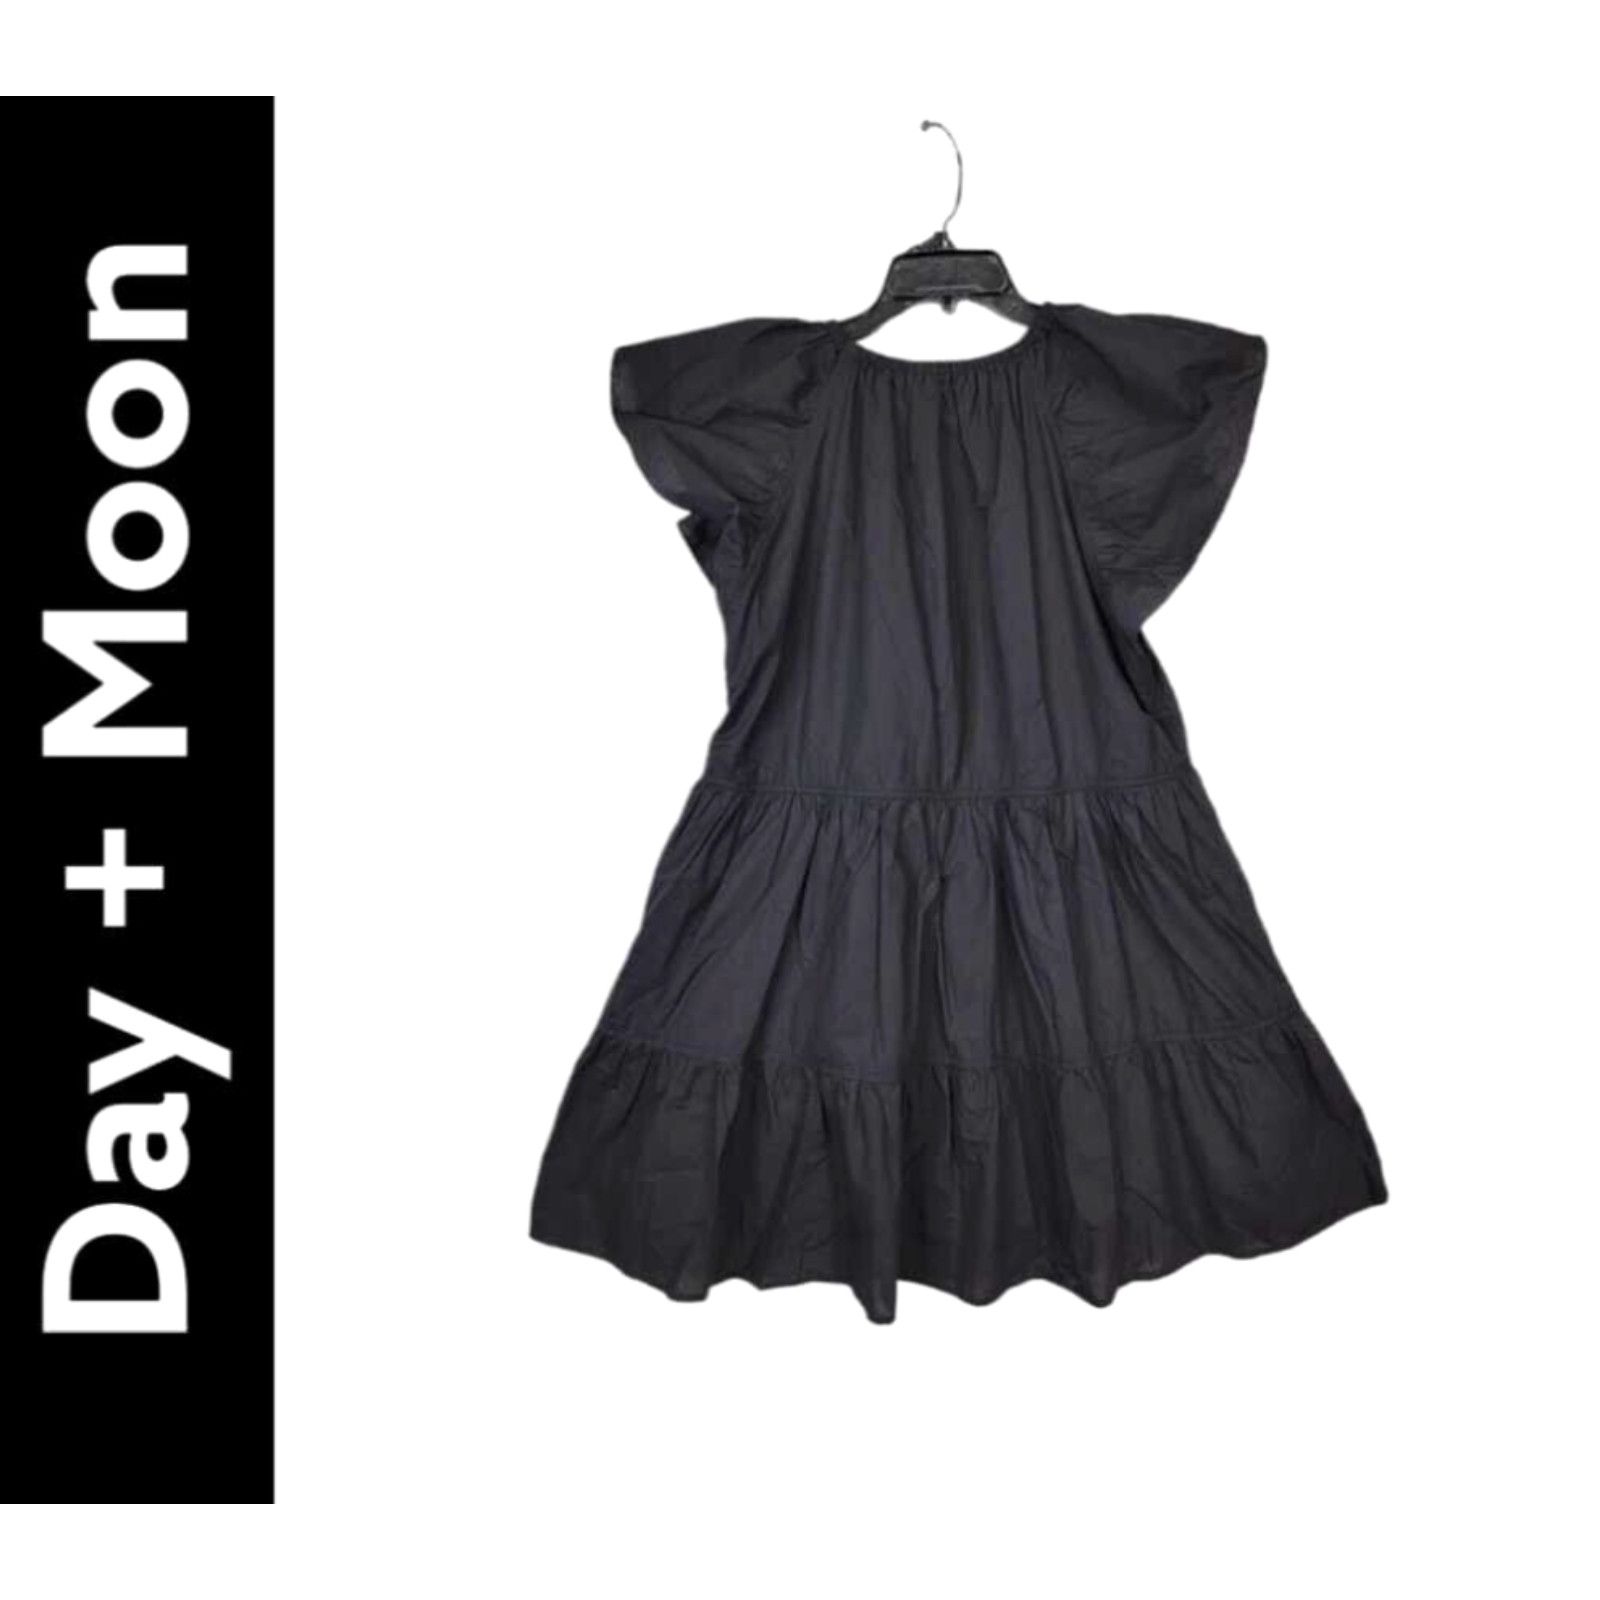 Vintage Day + Moon Women Medium Black Trapeze Flare Boho Dress Swing Short Sleeves Size M / US 6-8 / IT 42-44 - 2 Preview